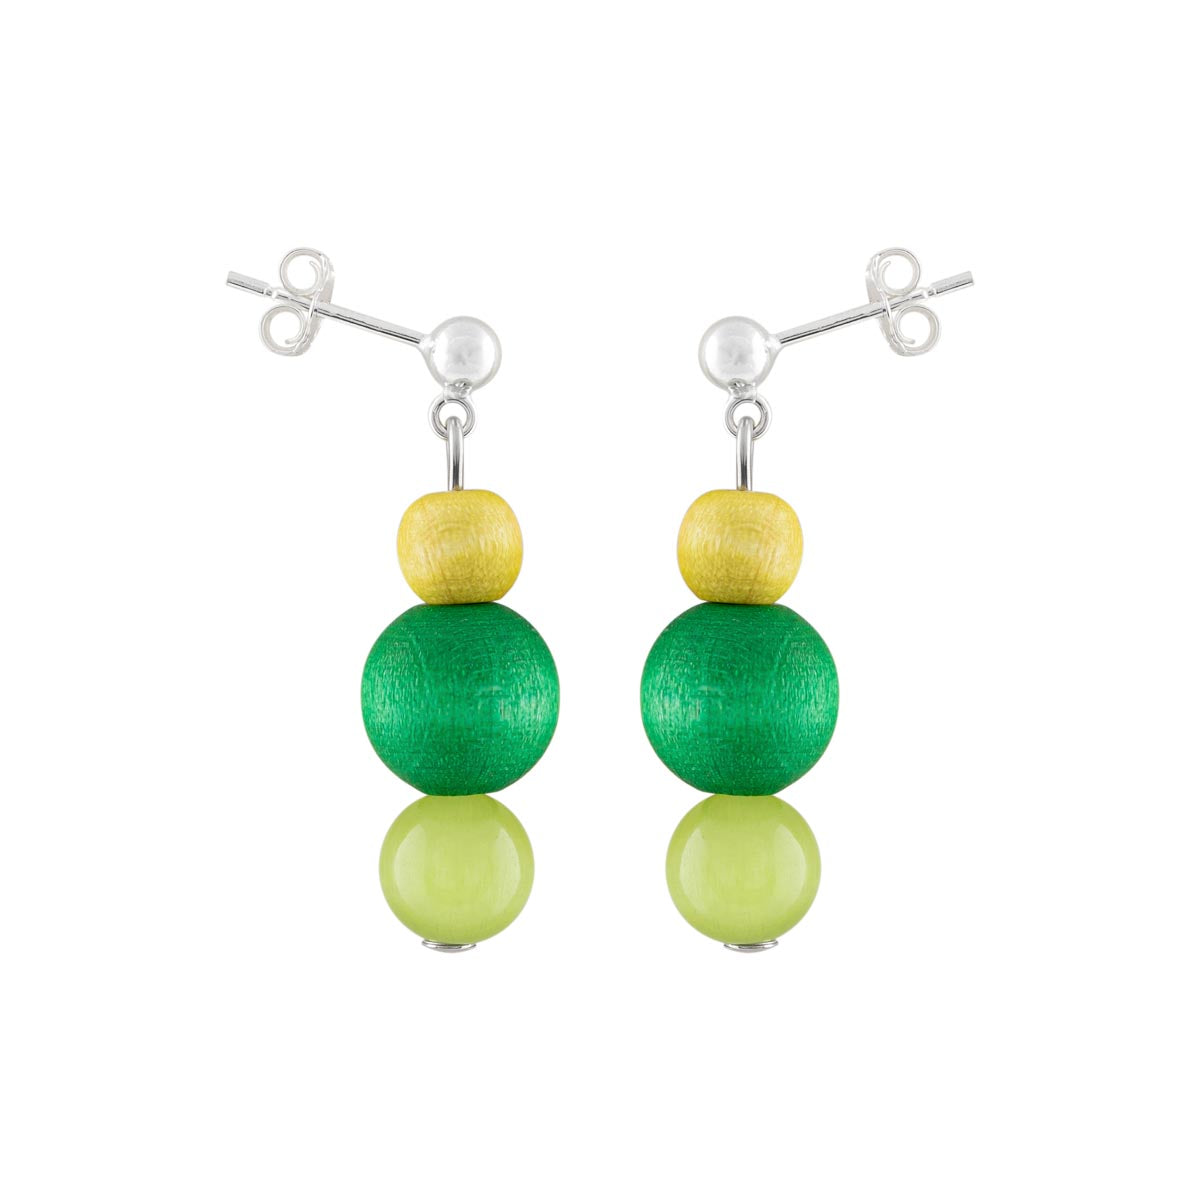 Irene earrings, shades of green